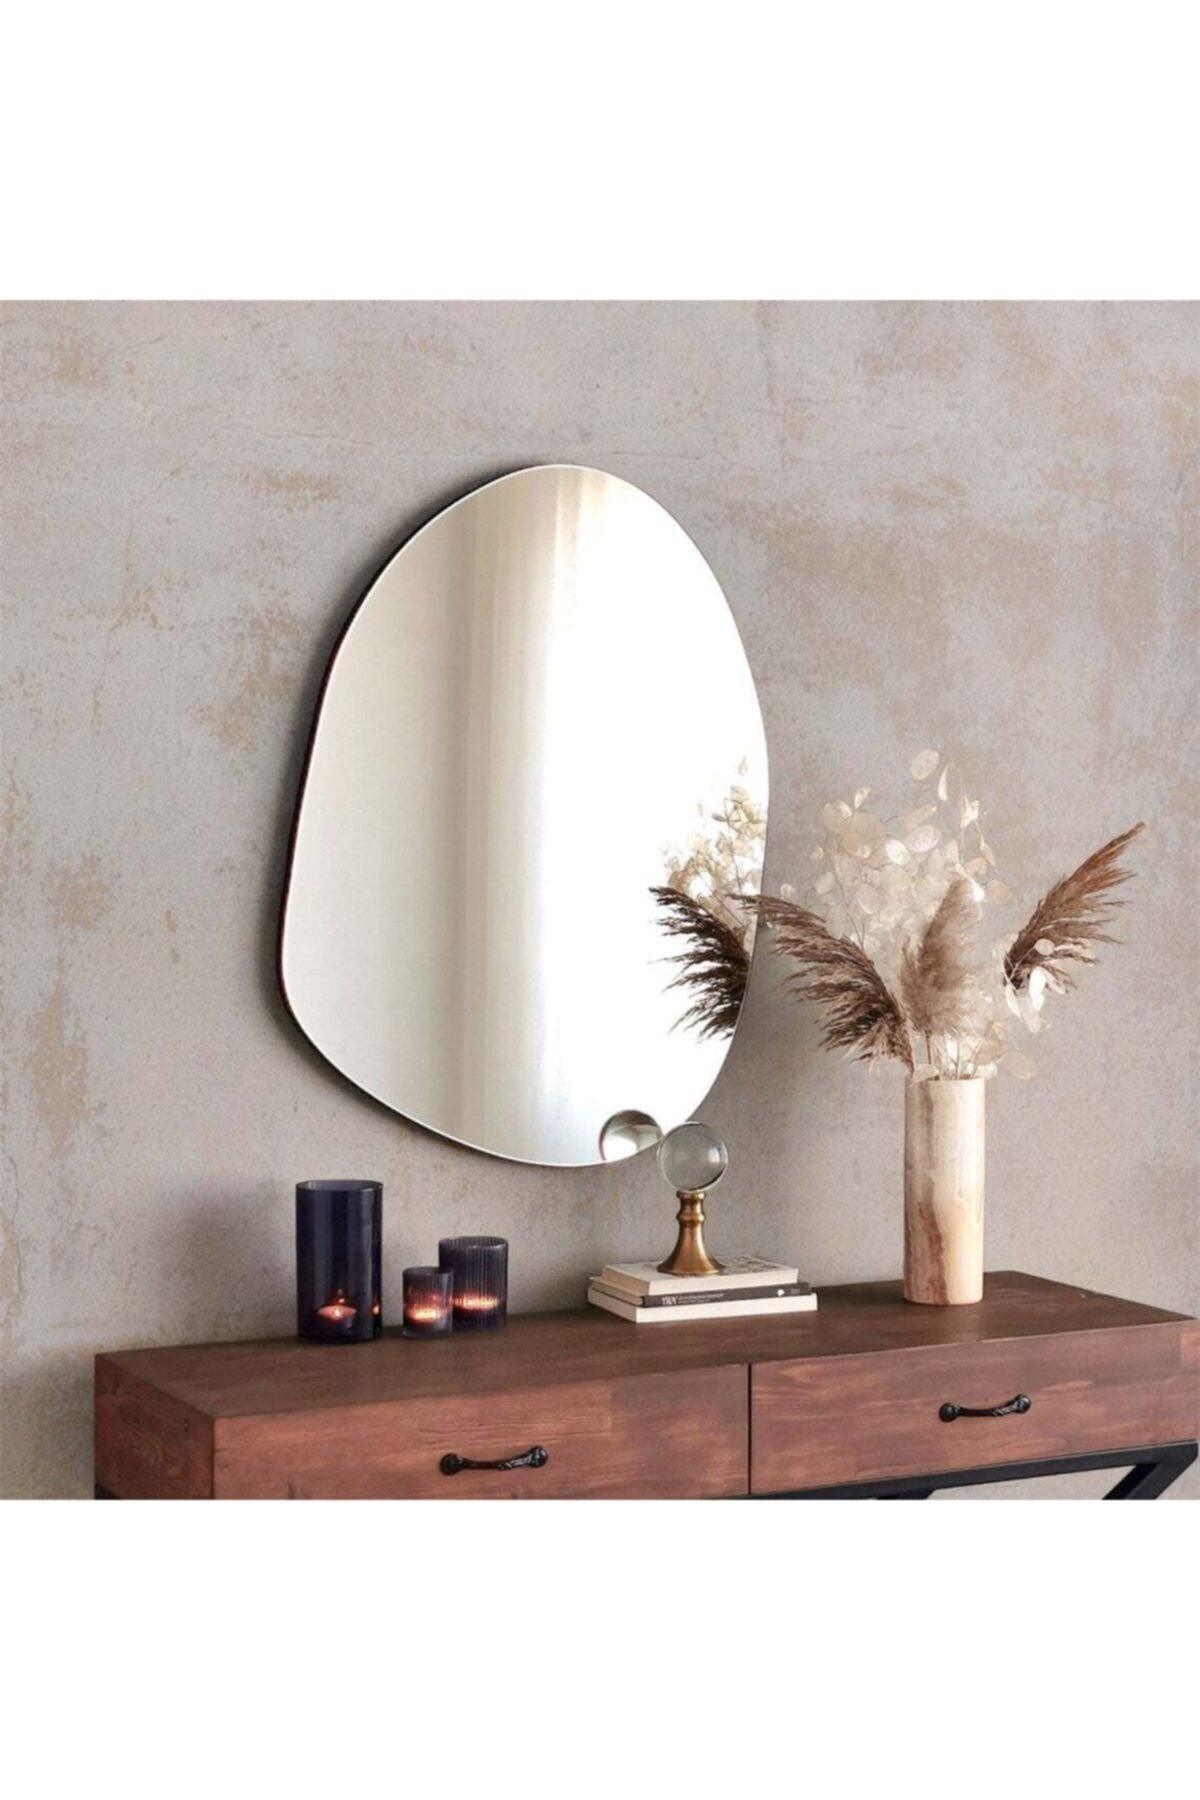 California Asymmetric Mirror Console Dresuar Hallway Decor Mirror 75*55 - Swordslife